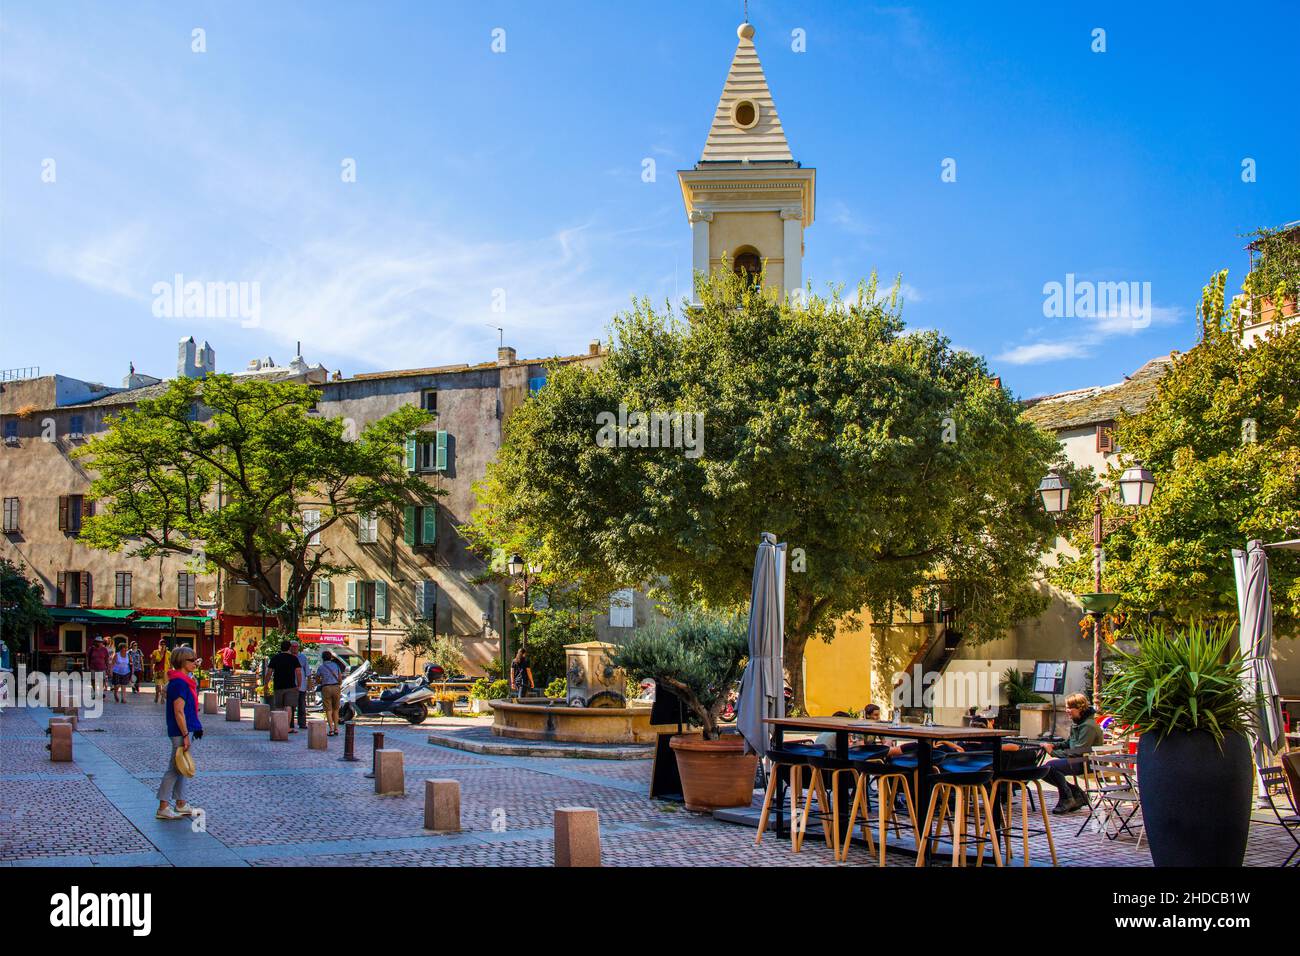 Saint-Florent with Mediterranean charm, Cap Corse, Corsica, Saint-Florent, Corsica, France, Europe Stock Photo